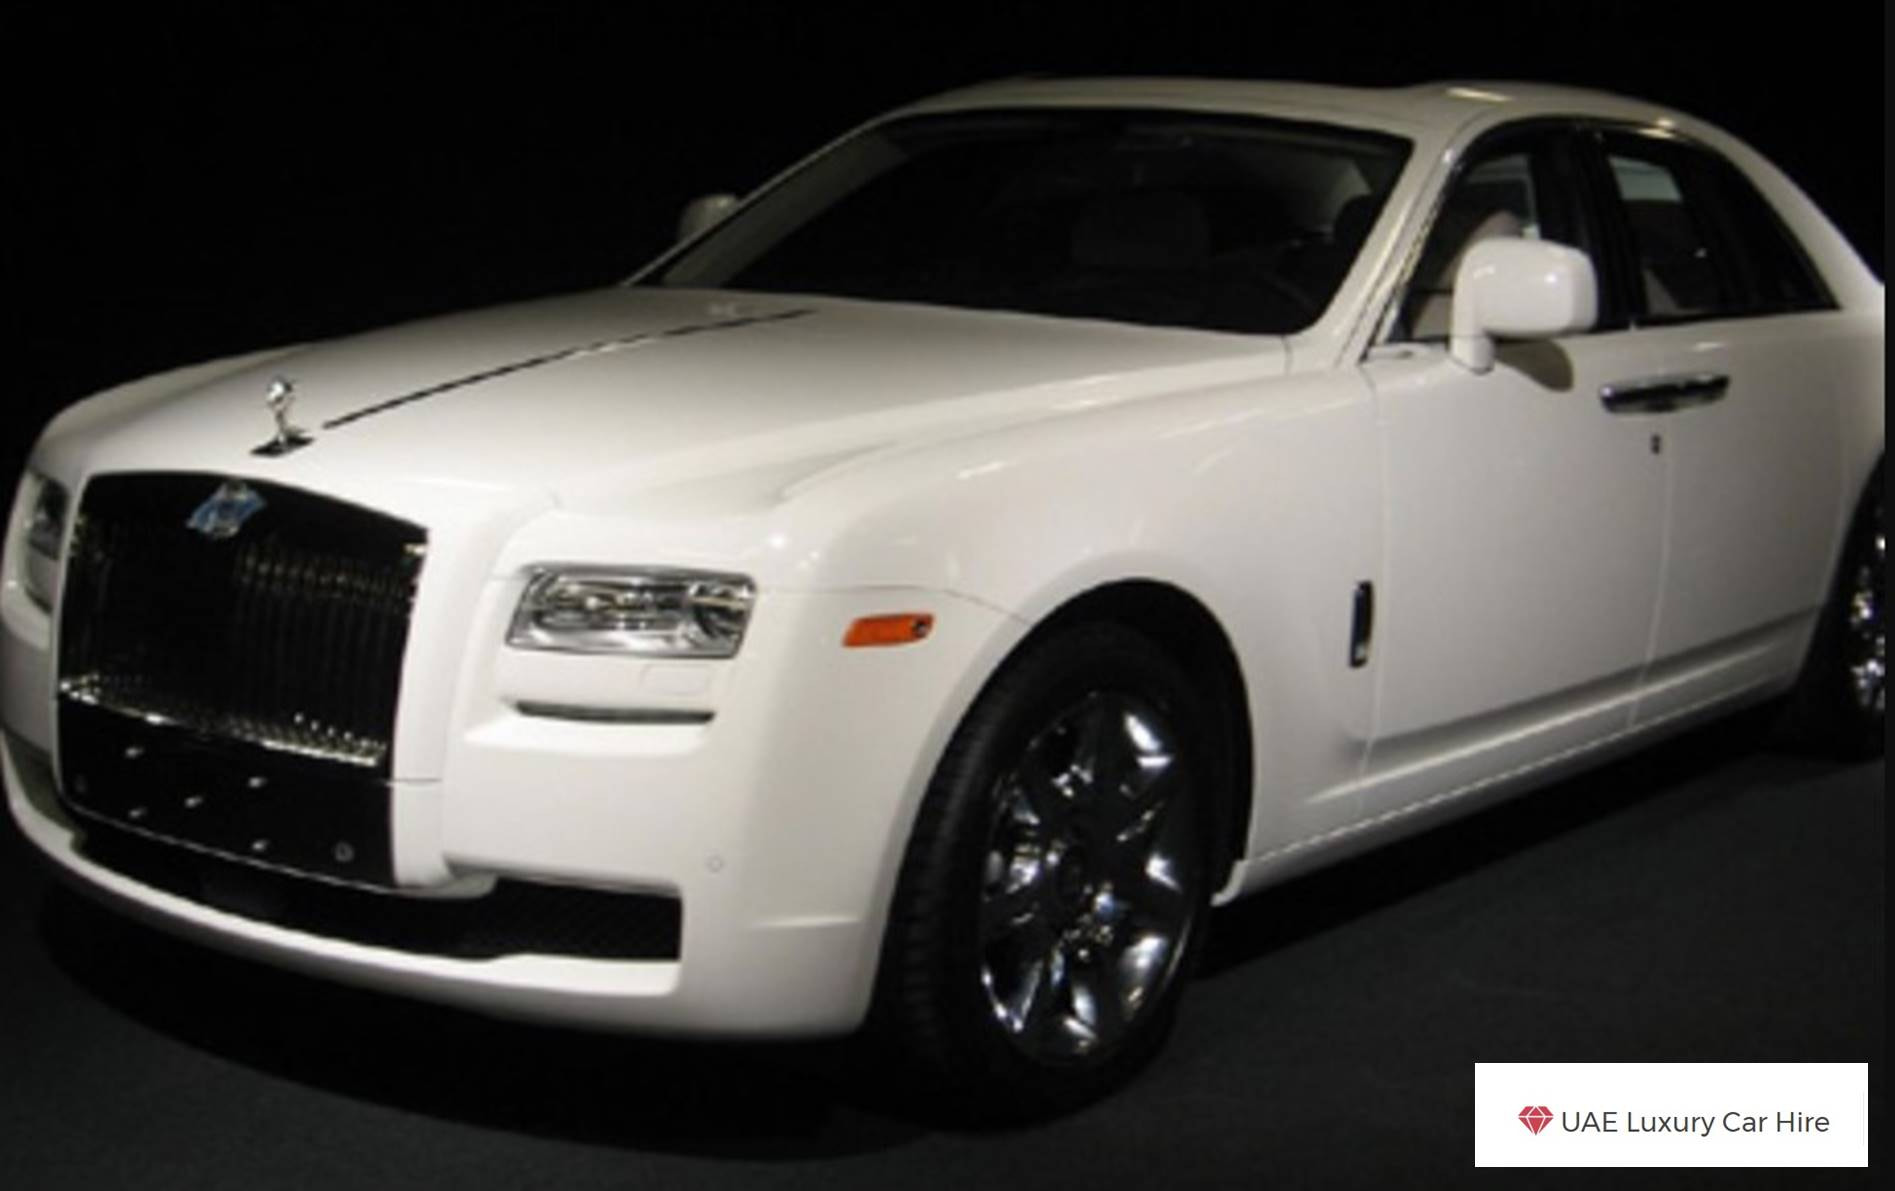 Luxury Car Hire UAE | Luxury Car Hire Dubai